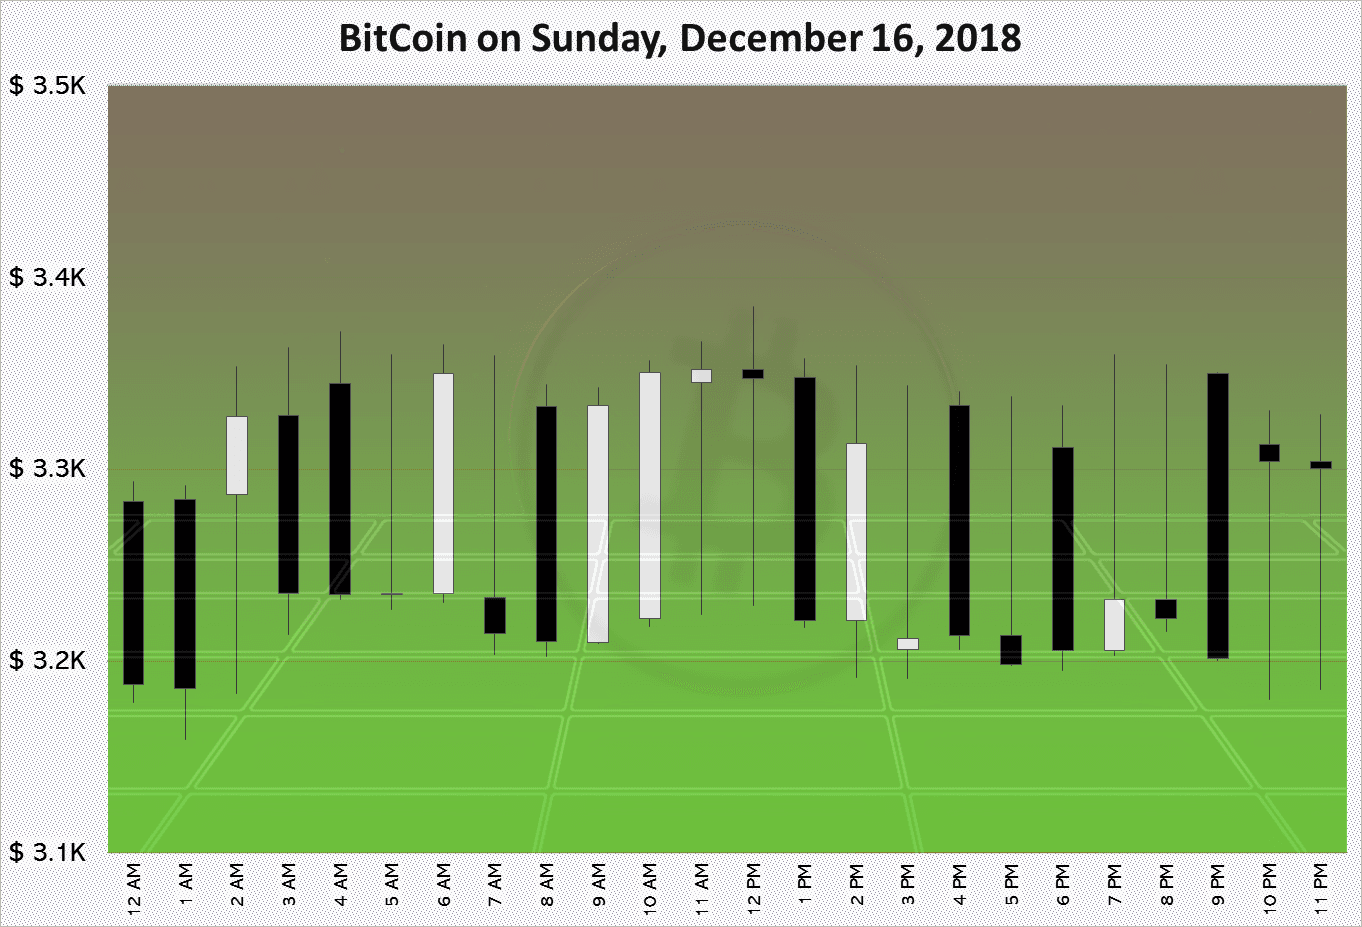 BitCoin on Sunday, December 16, 2018